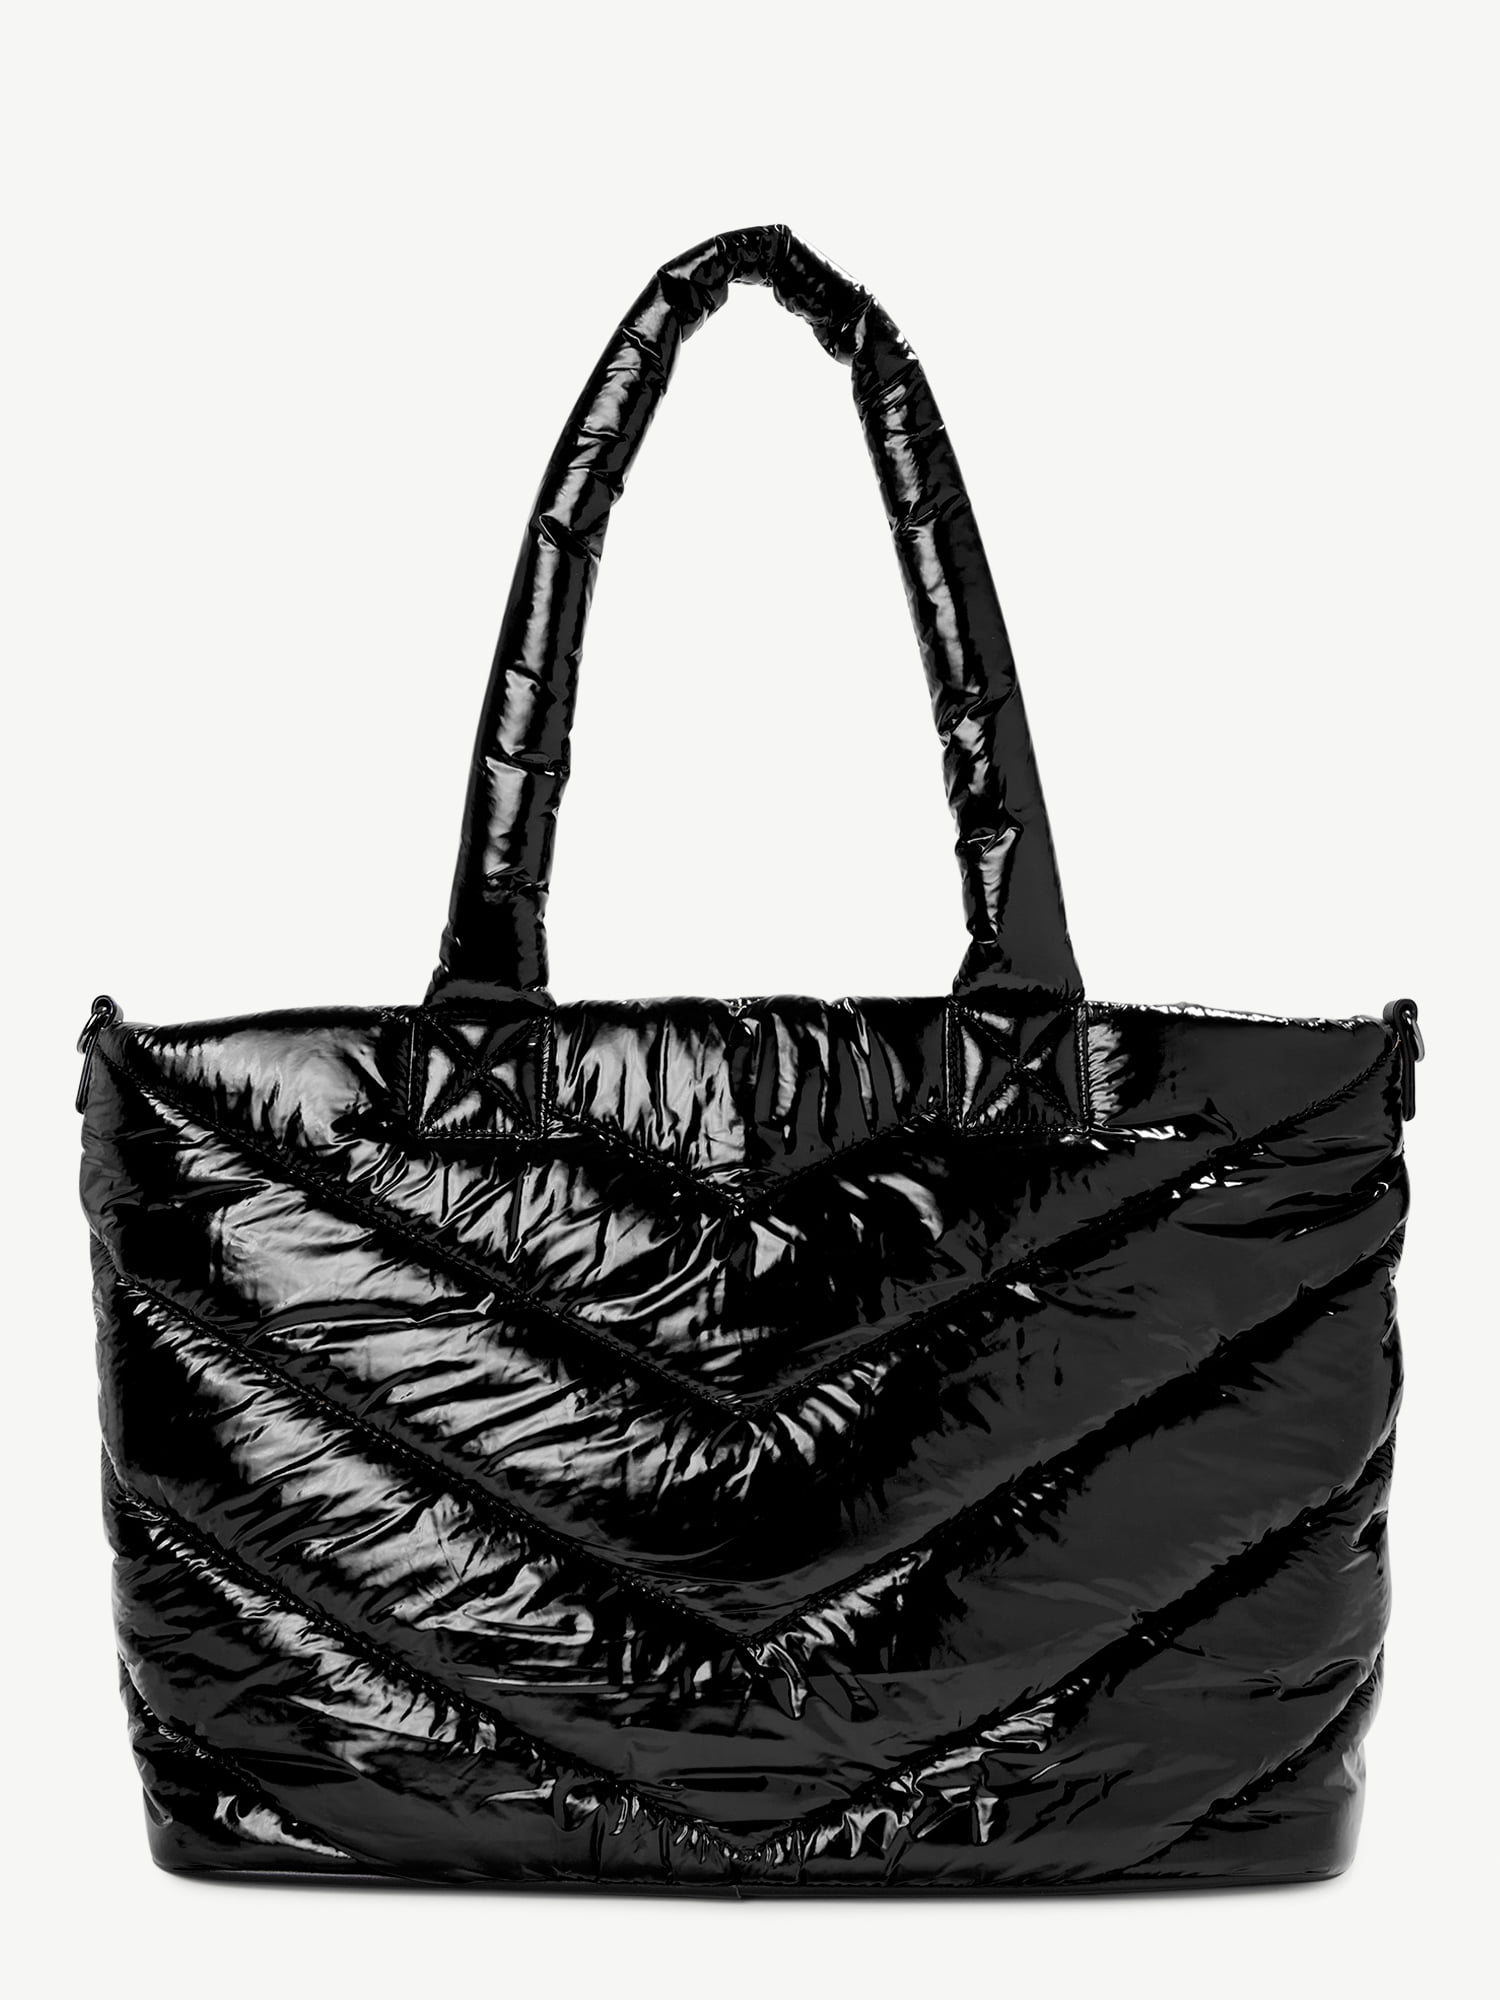 Original Medium Women's Tote Bag with Detachable Sling Black Color